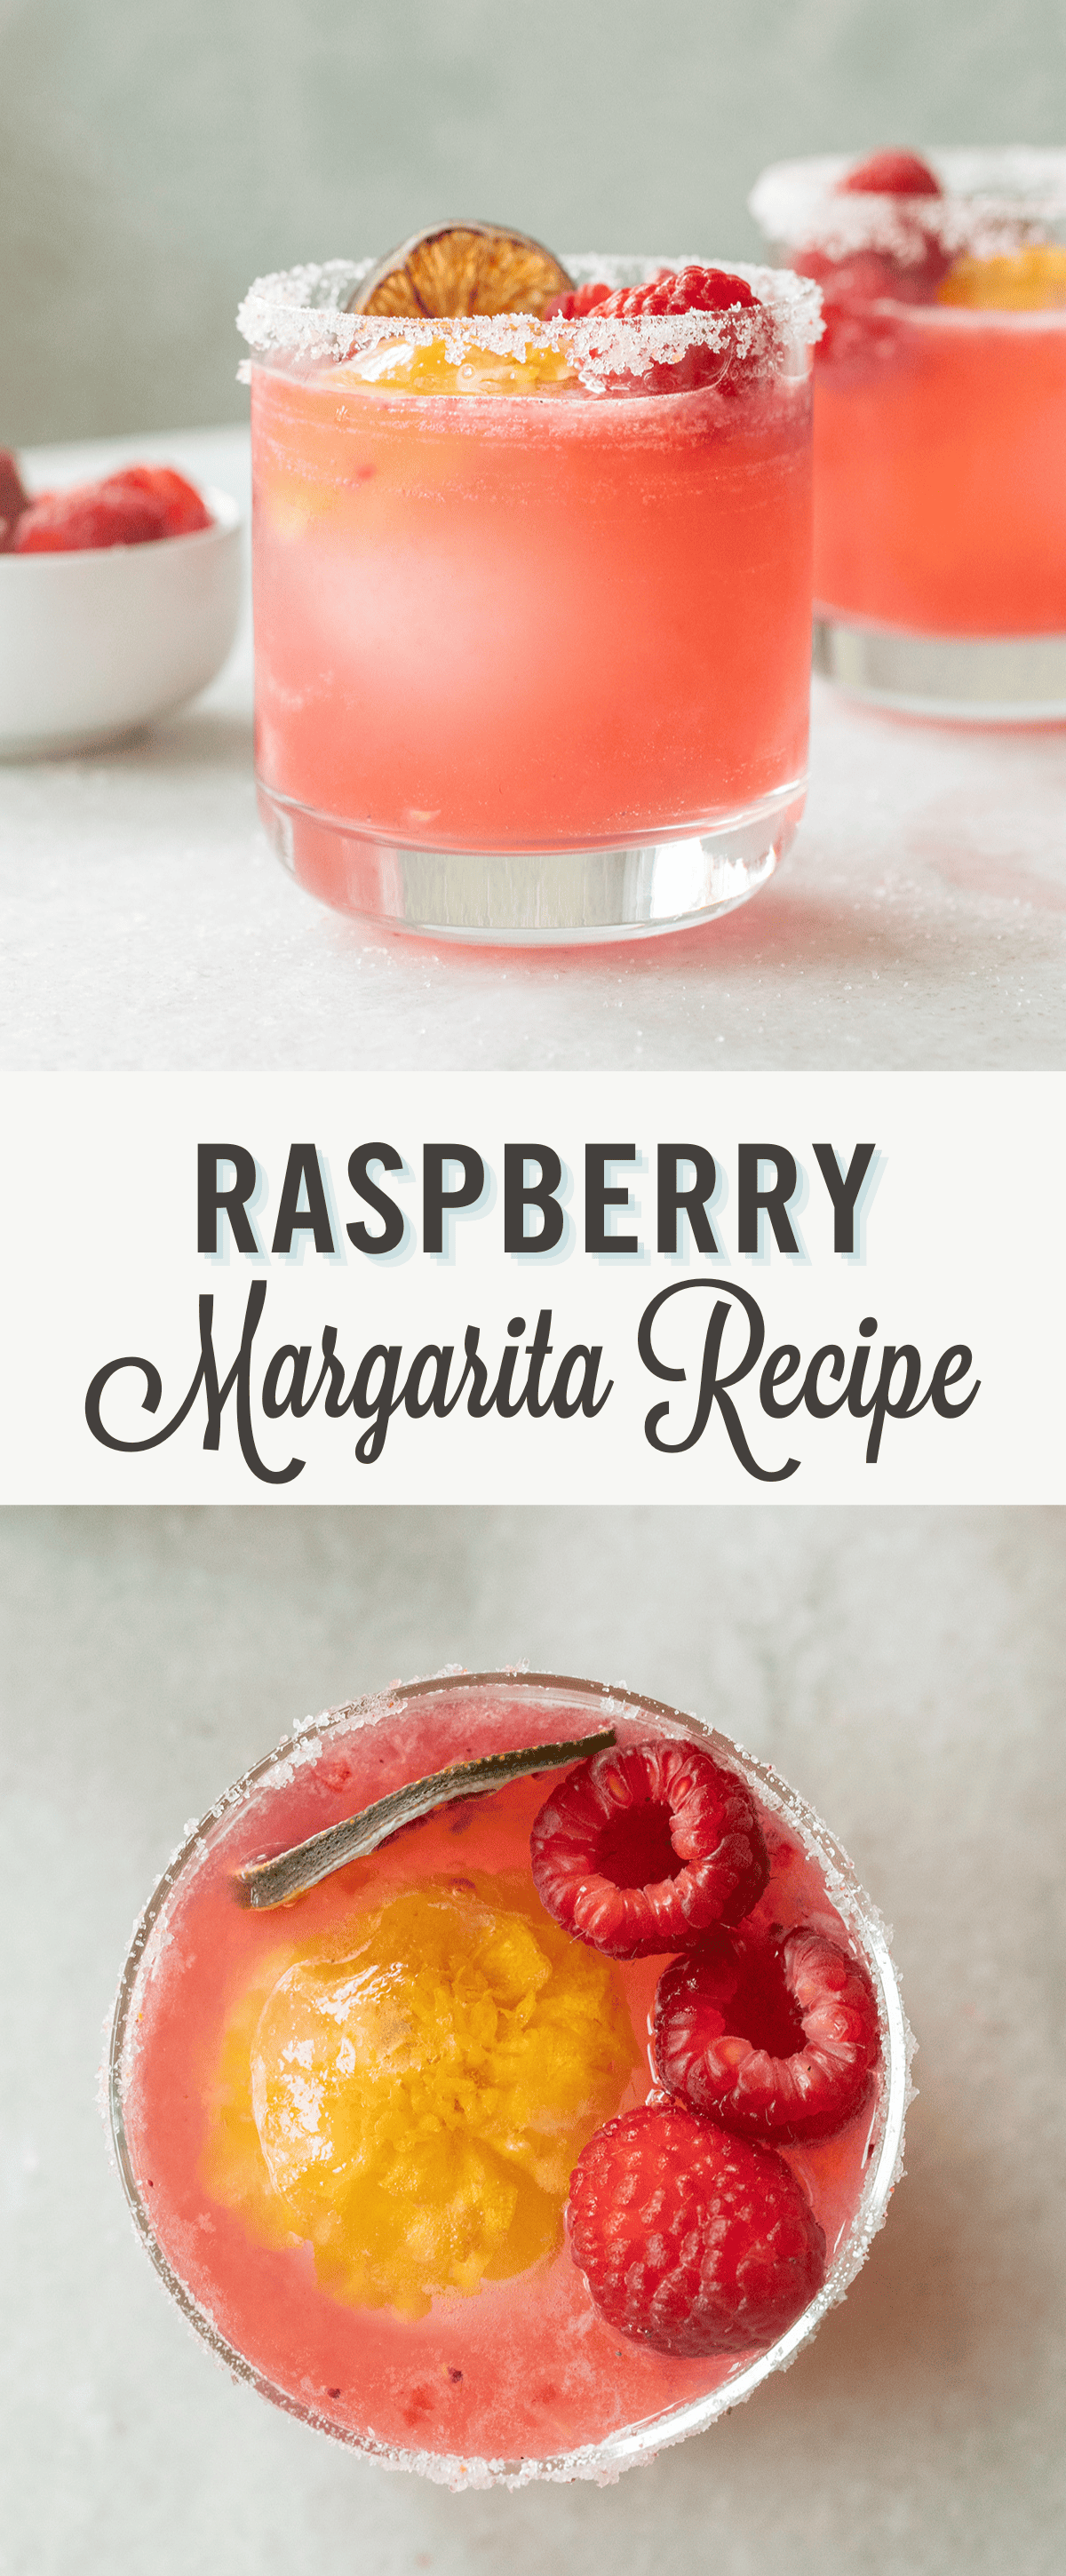 Raspberry margarita recipe with text.